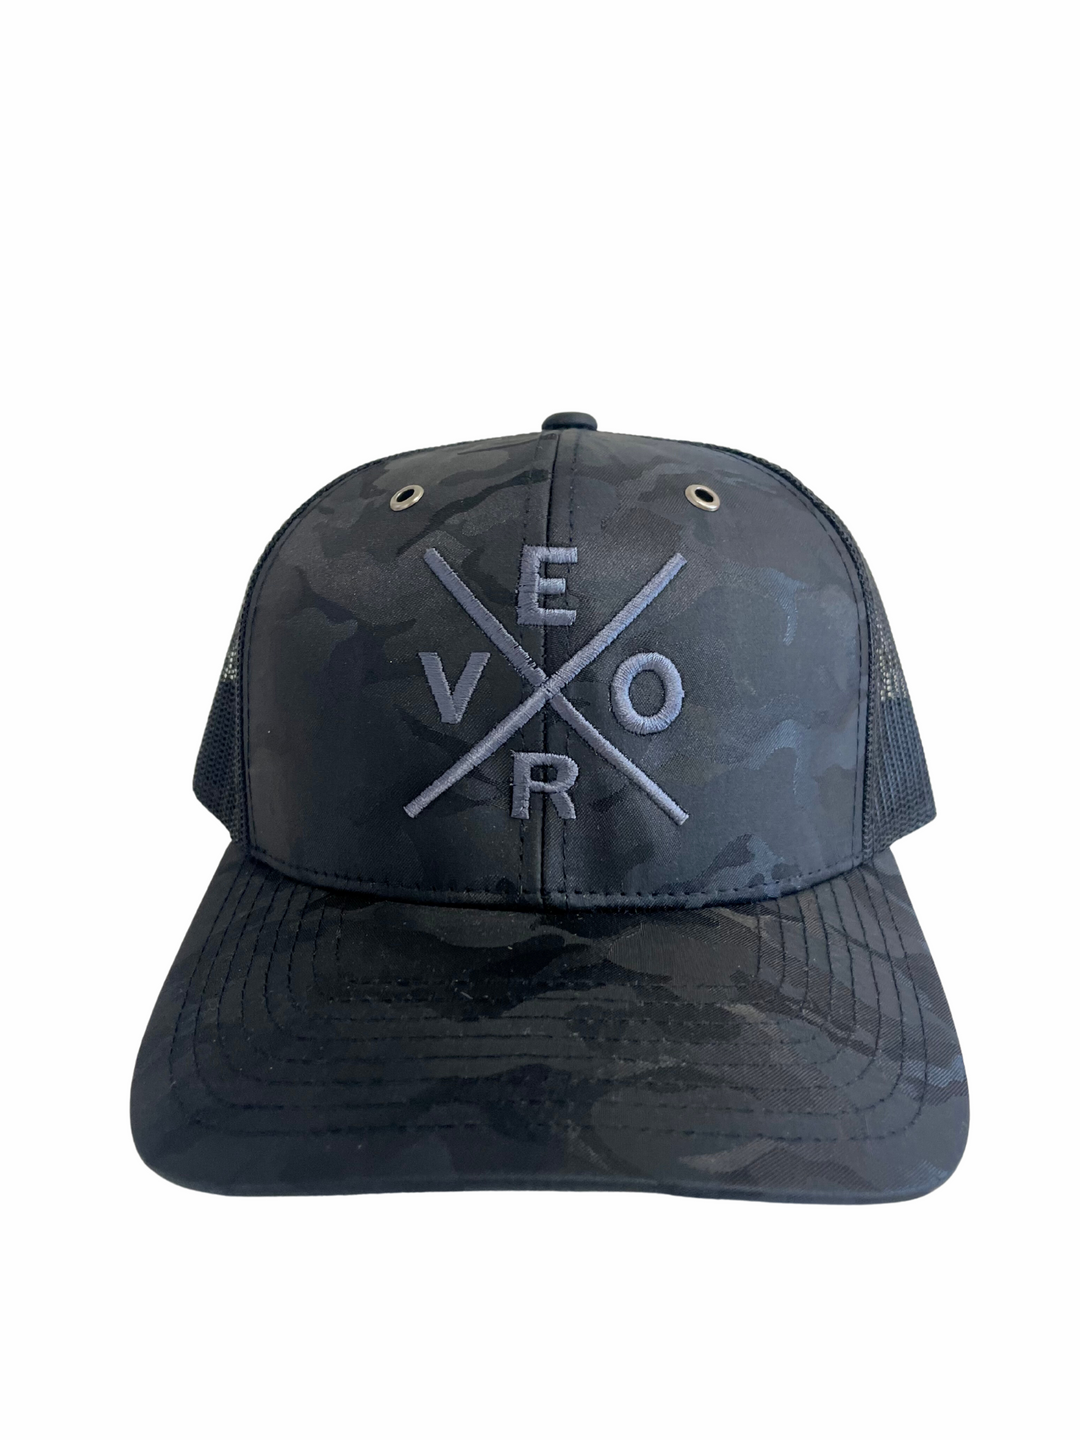 Vero Trucker Hat - Black Camo